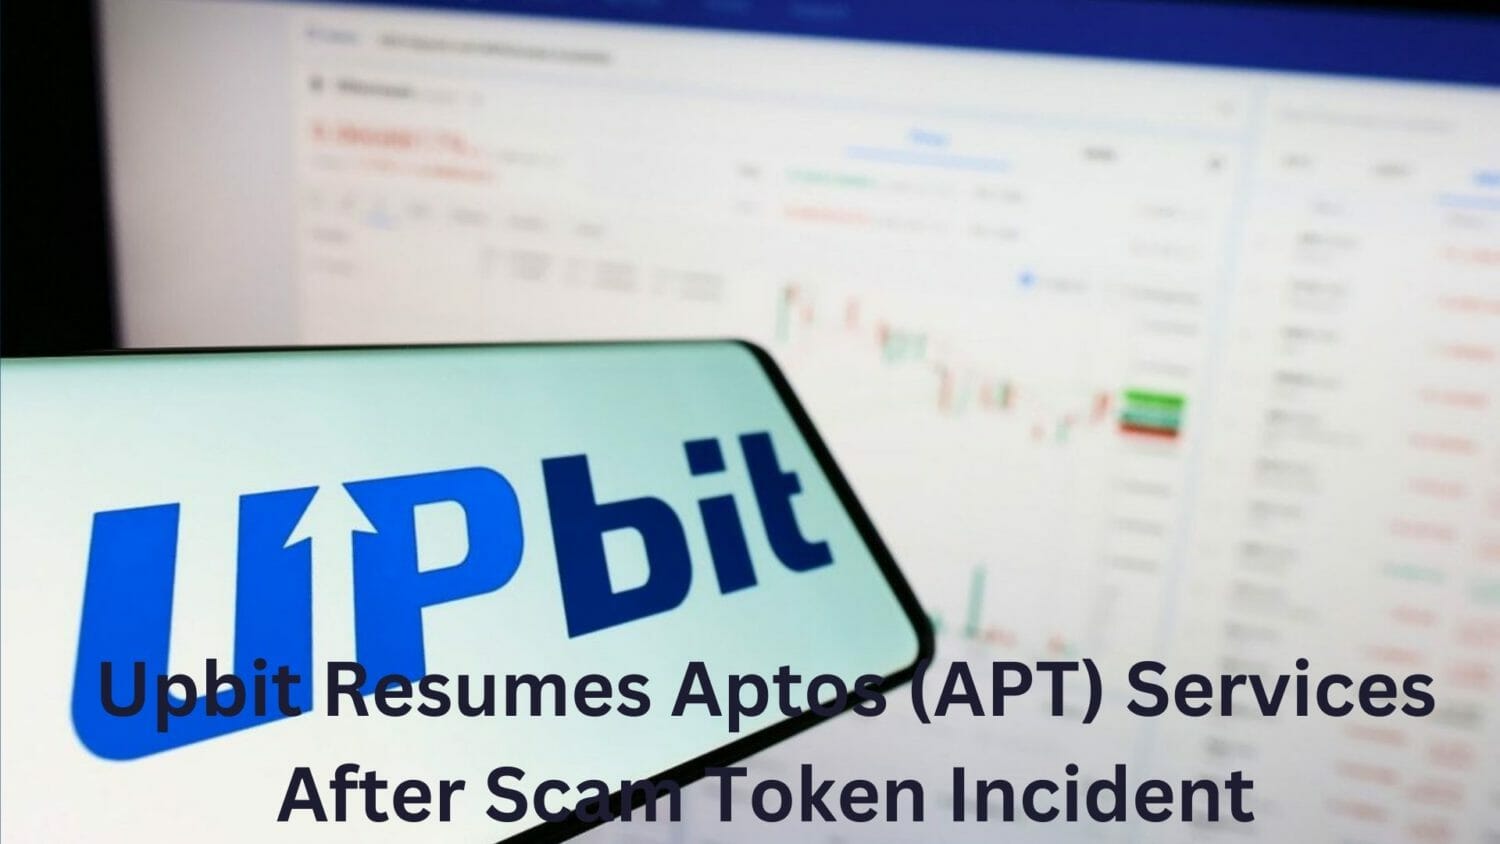 Upbit Resumes Aptos (Apt) Services After Scam Token Incident